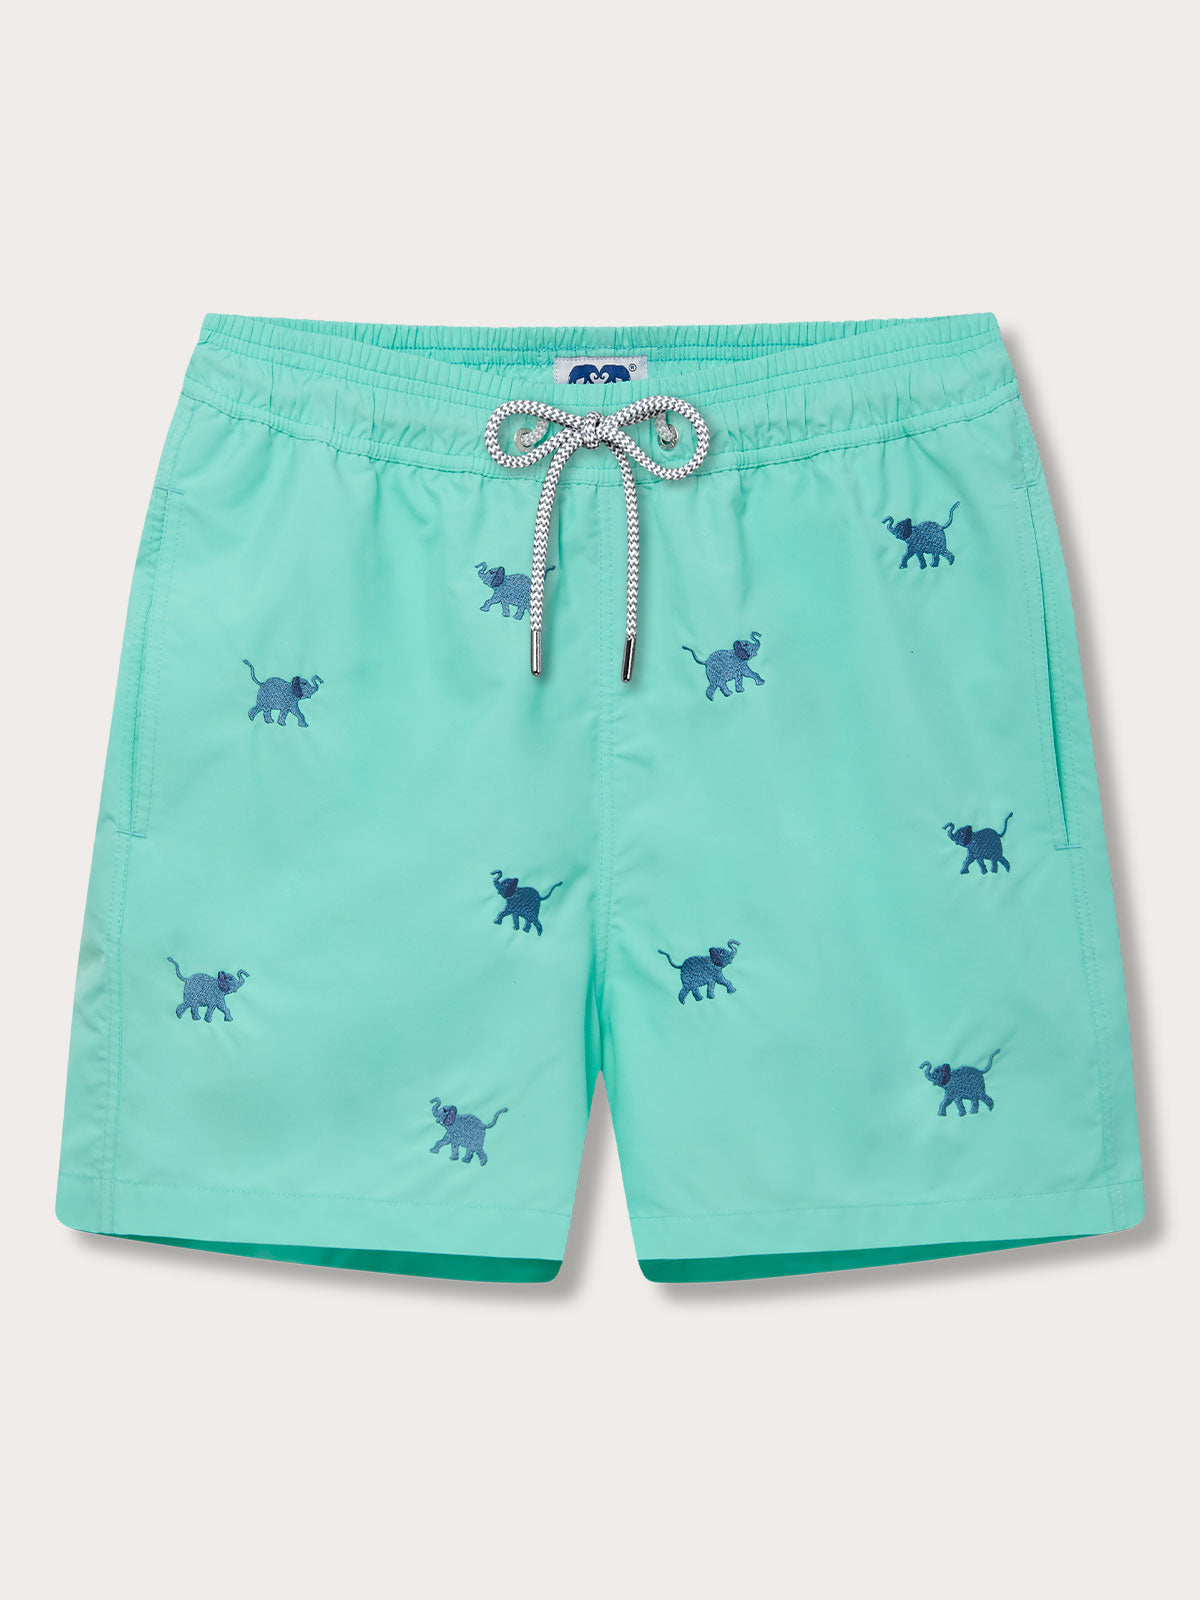 Men's Elephants Galore Embroidered Staniel Swim Shorts